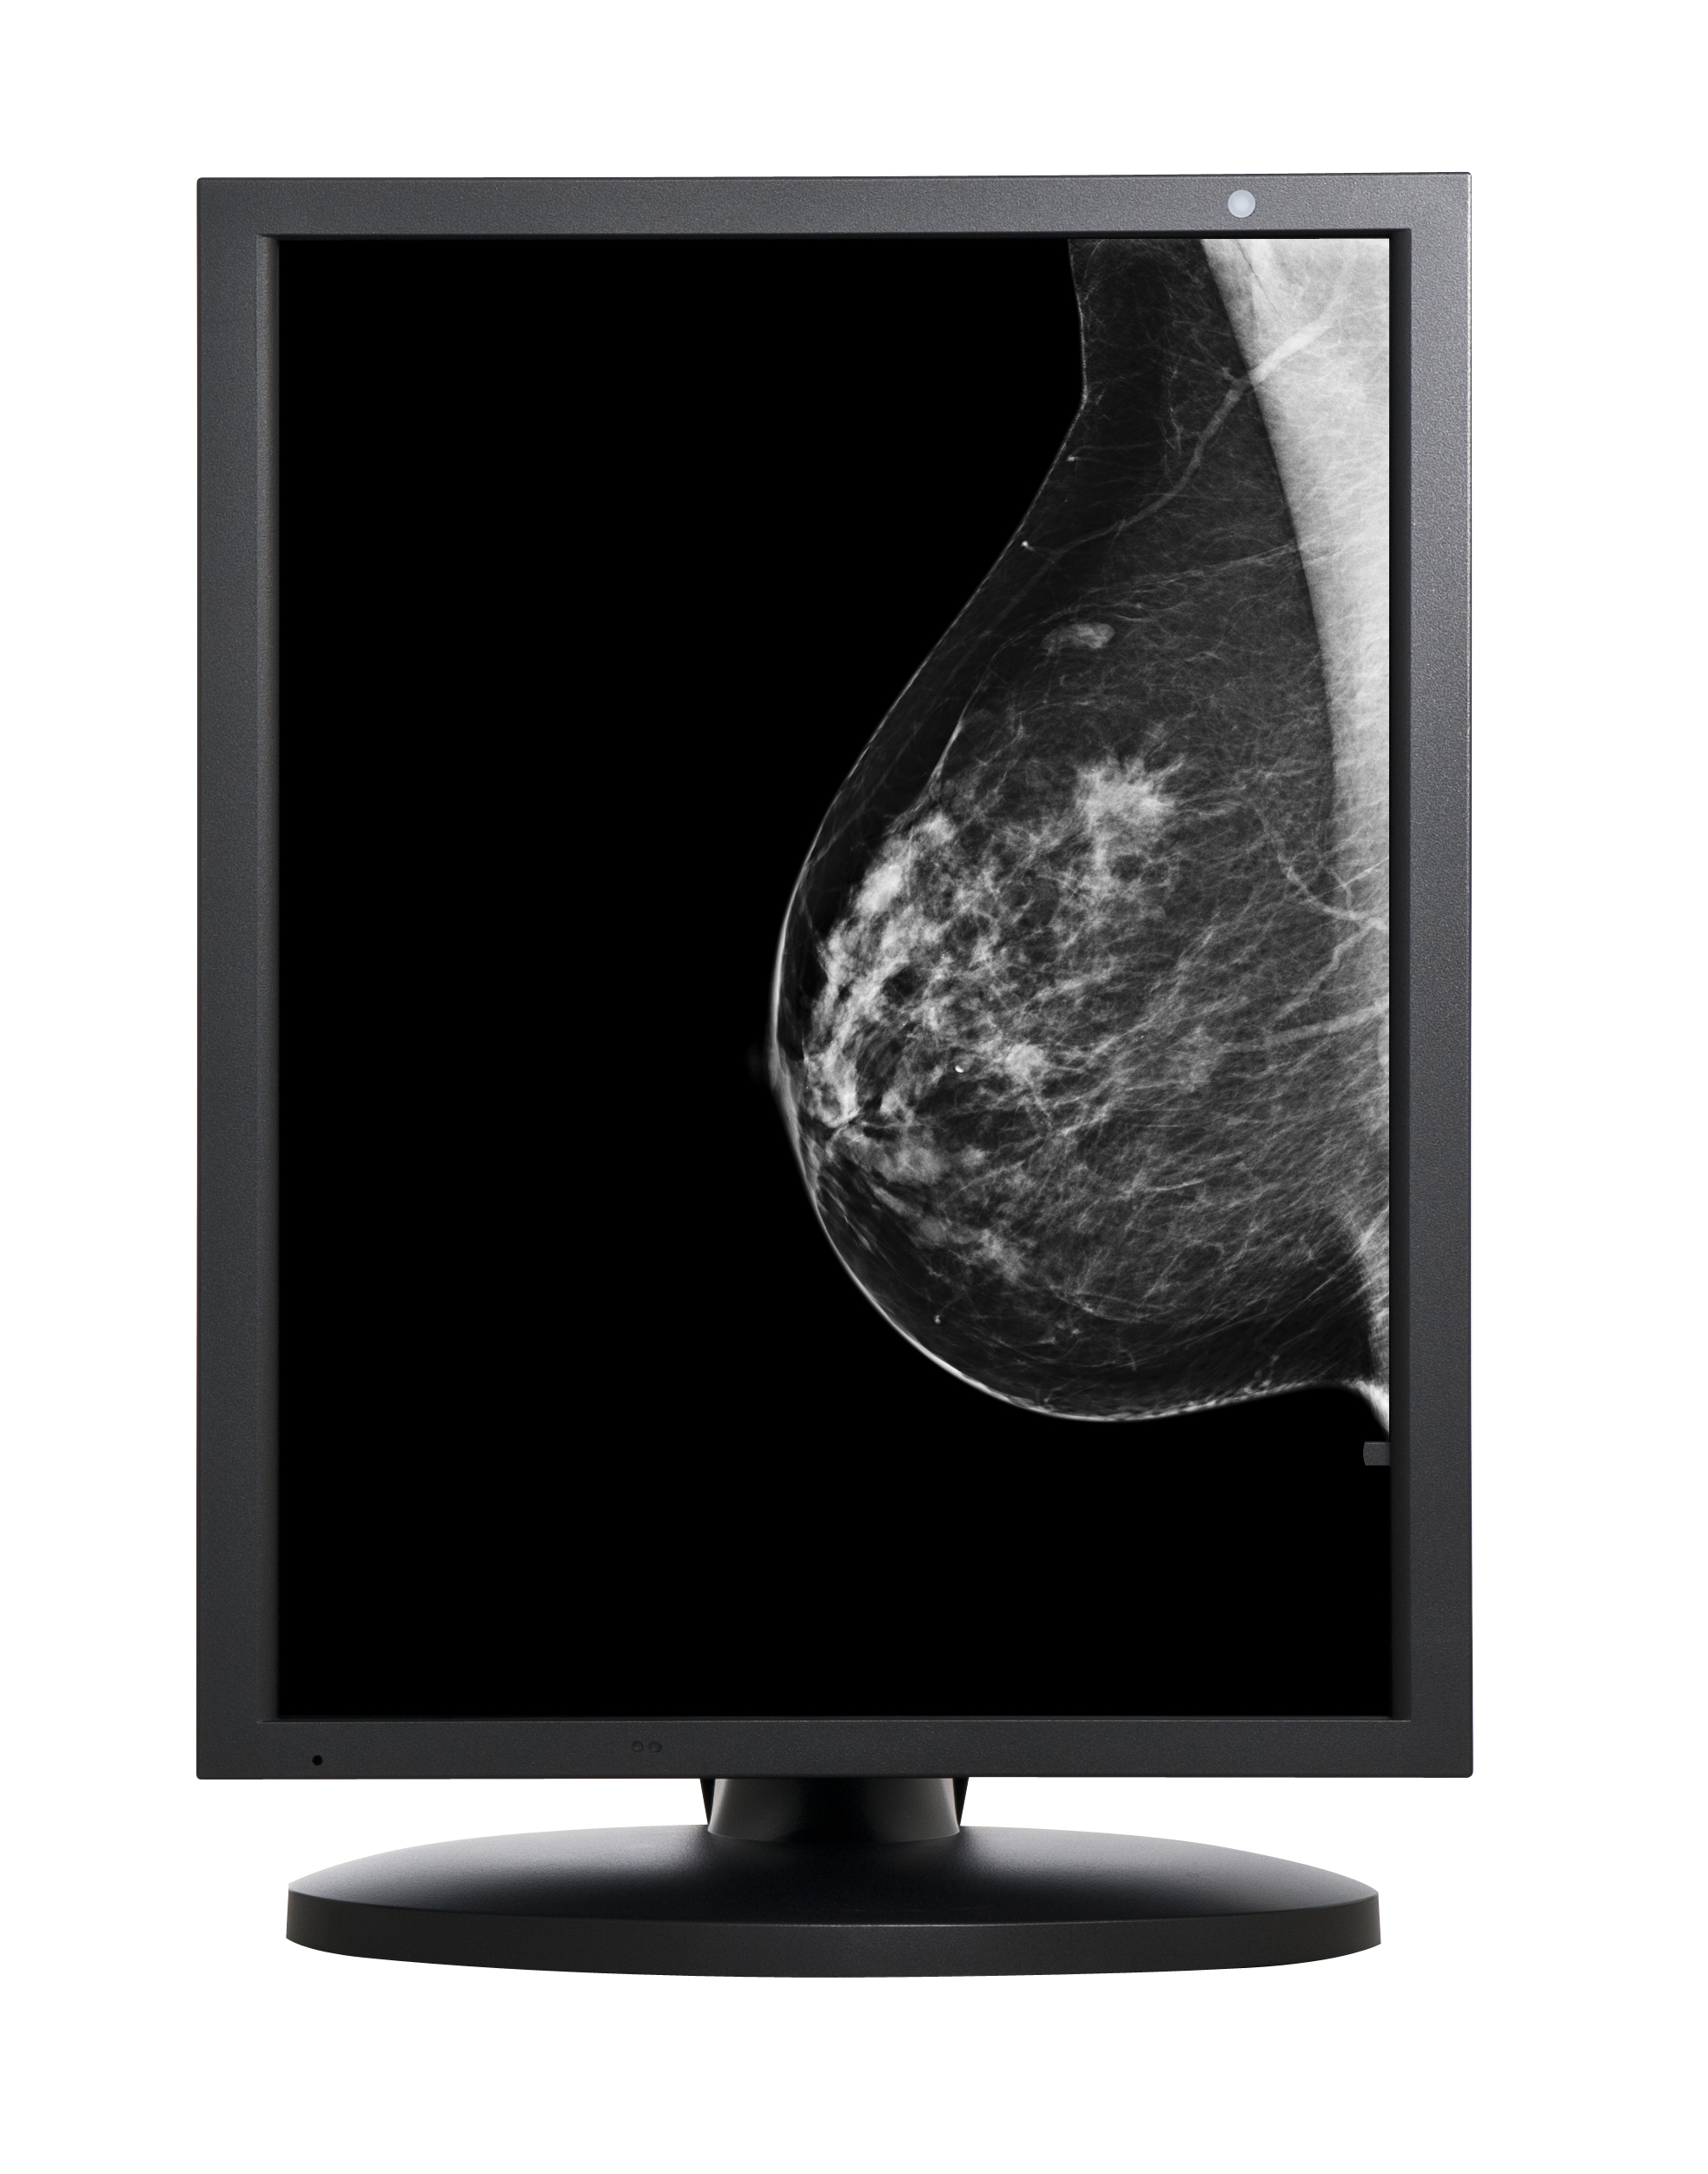 5M灰阶乳腺医用显示器